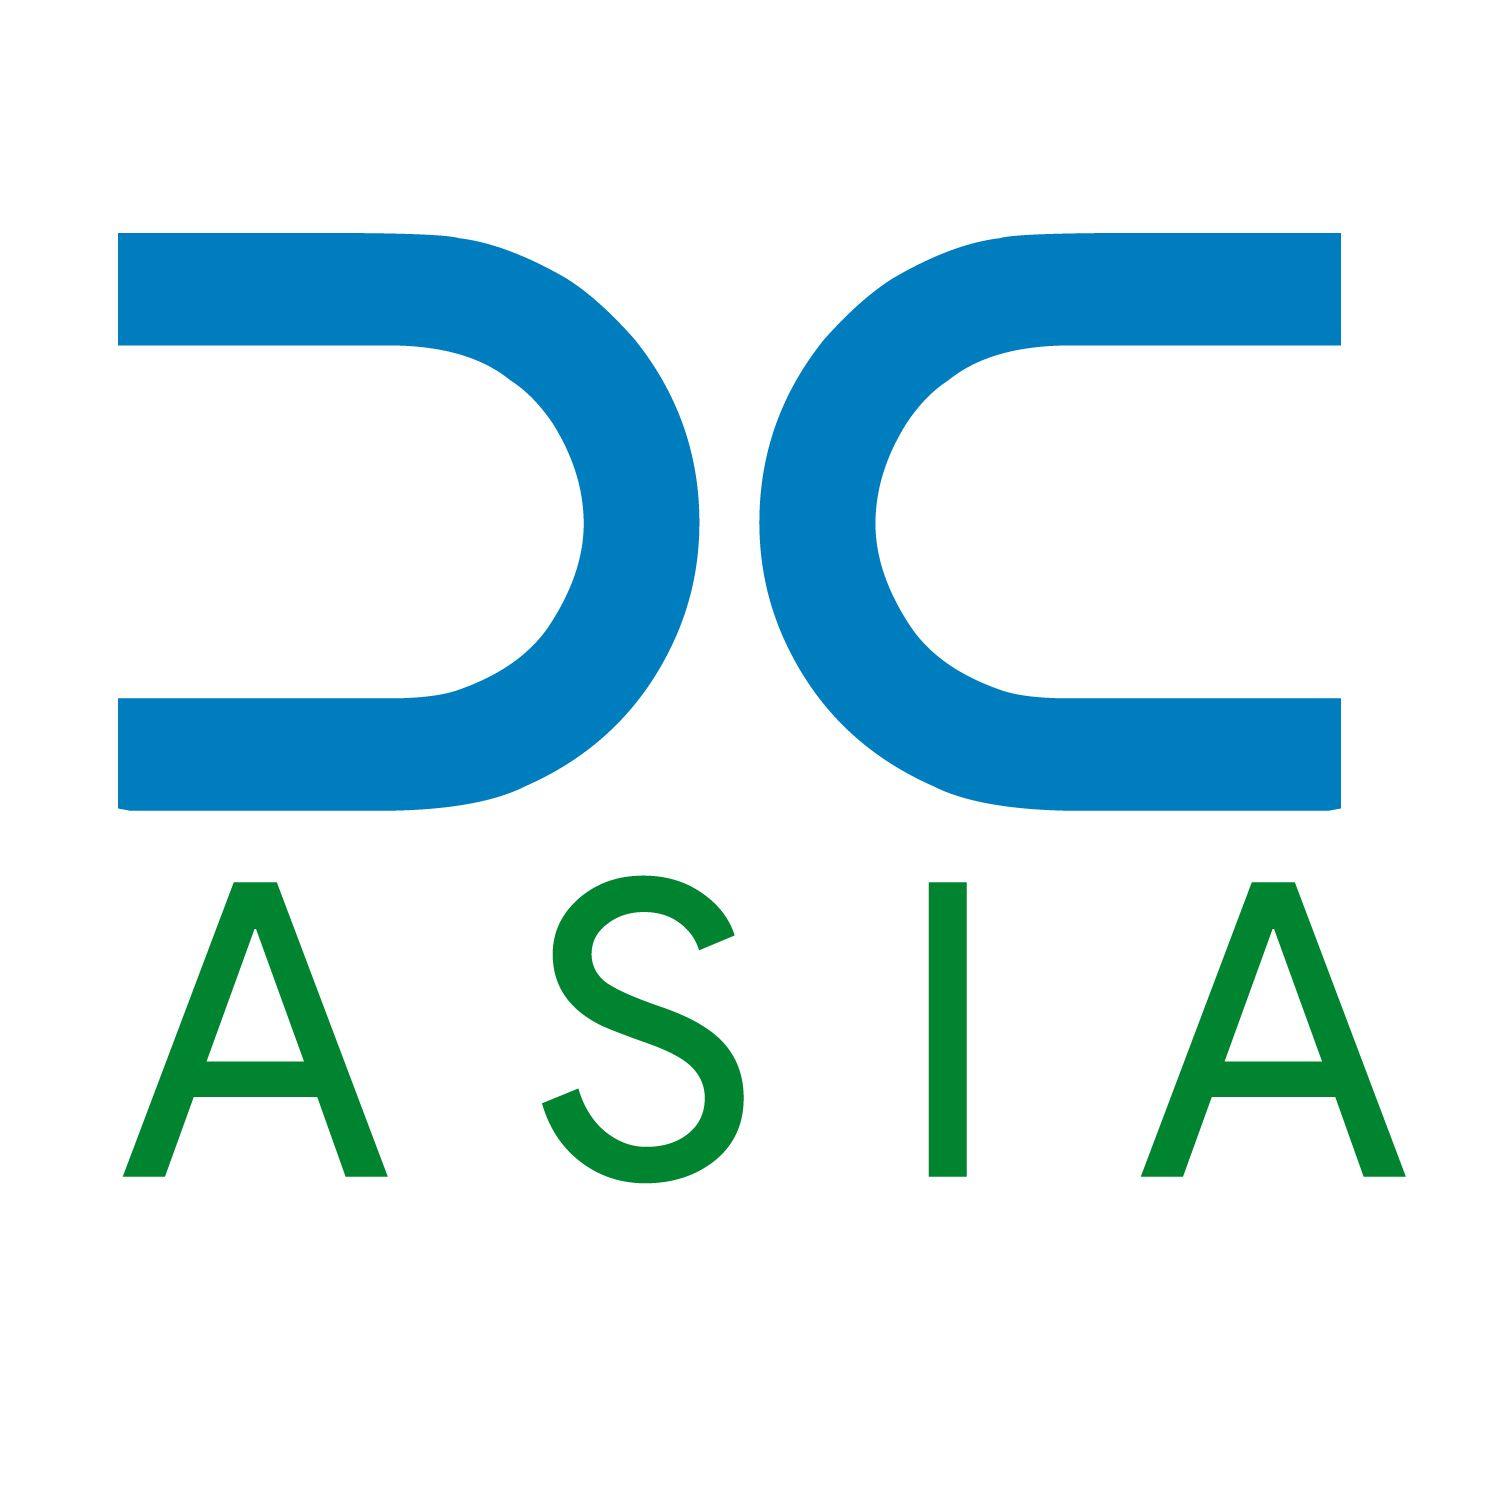 Japanese Technology Company Logo - Professional, Playful, Information Technology Logo Design for DC ...